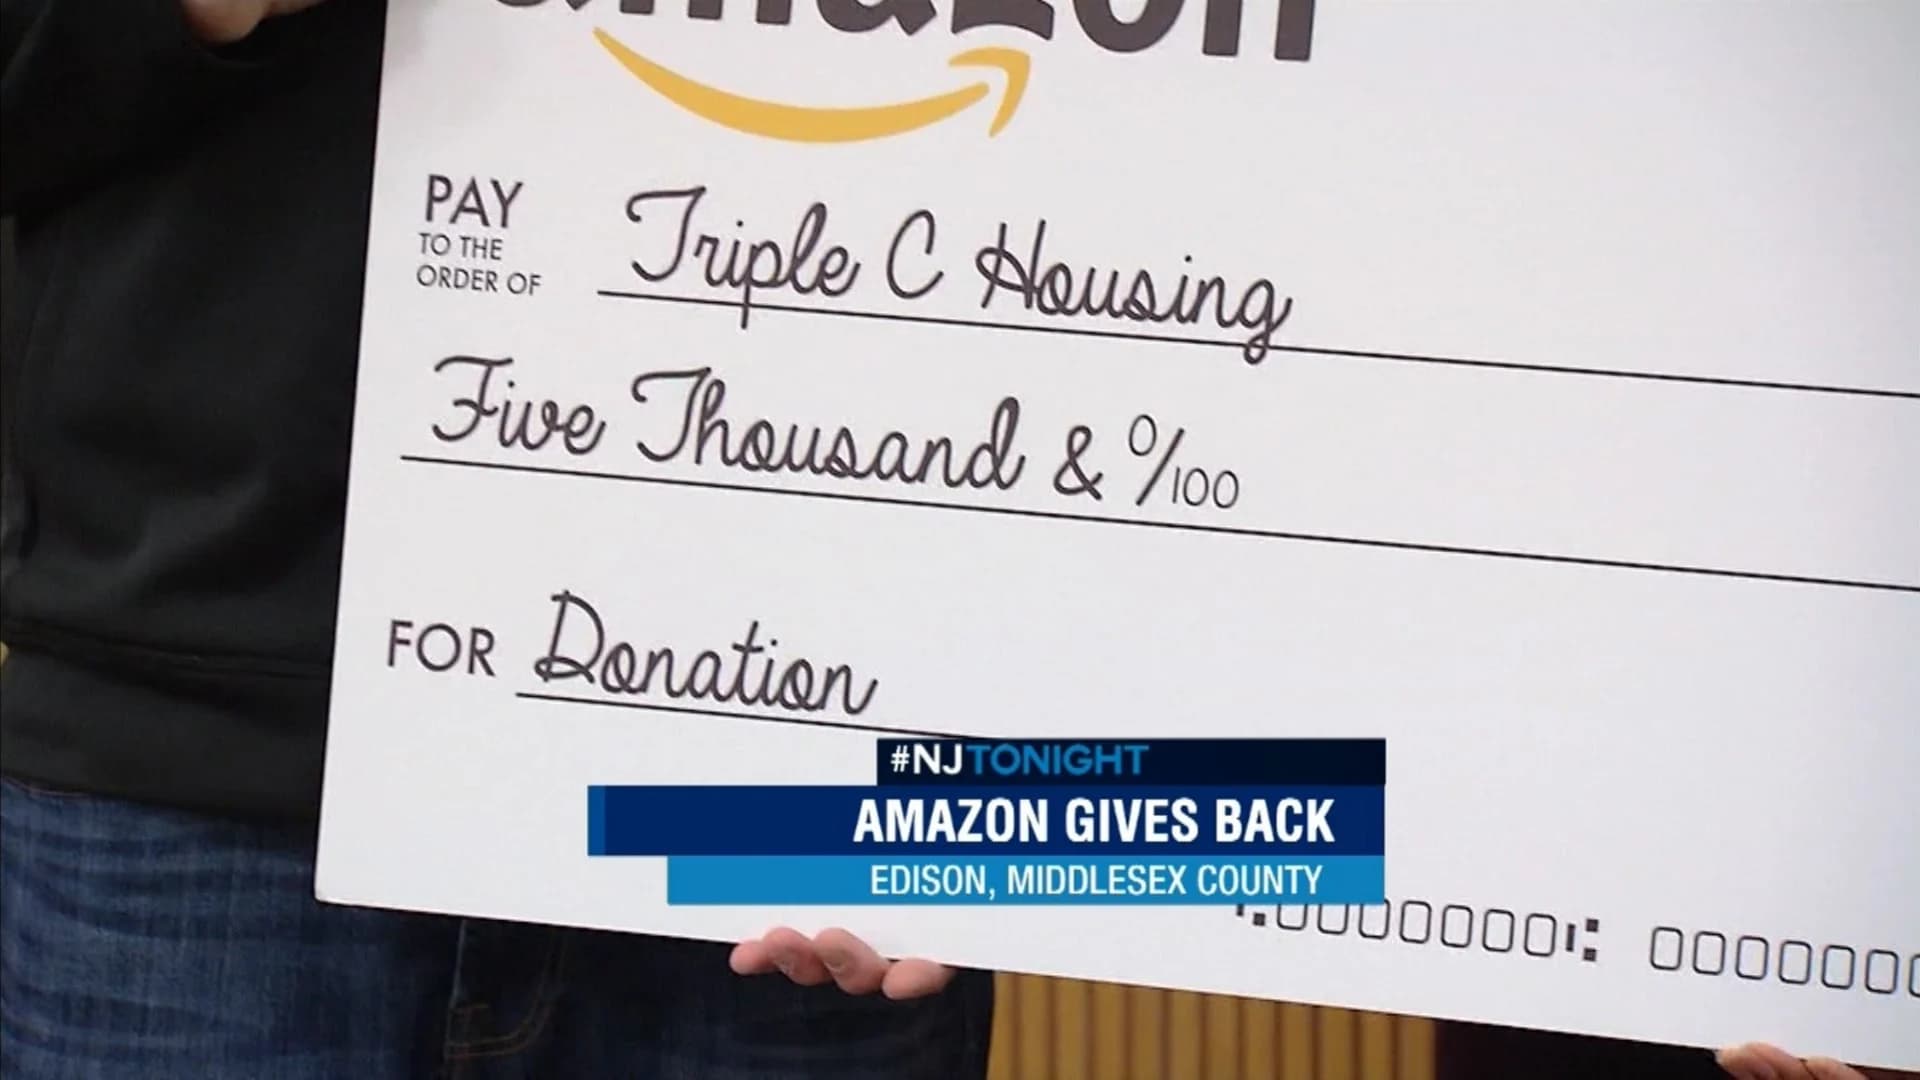 Amazon, Goya make charitable donations in New Jersey